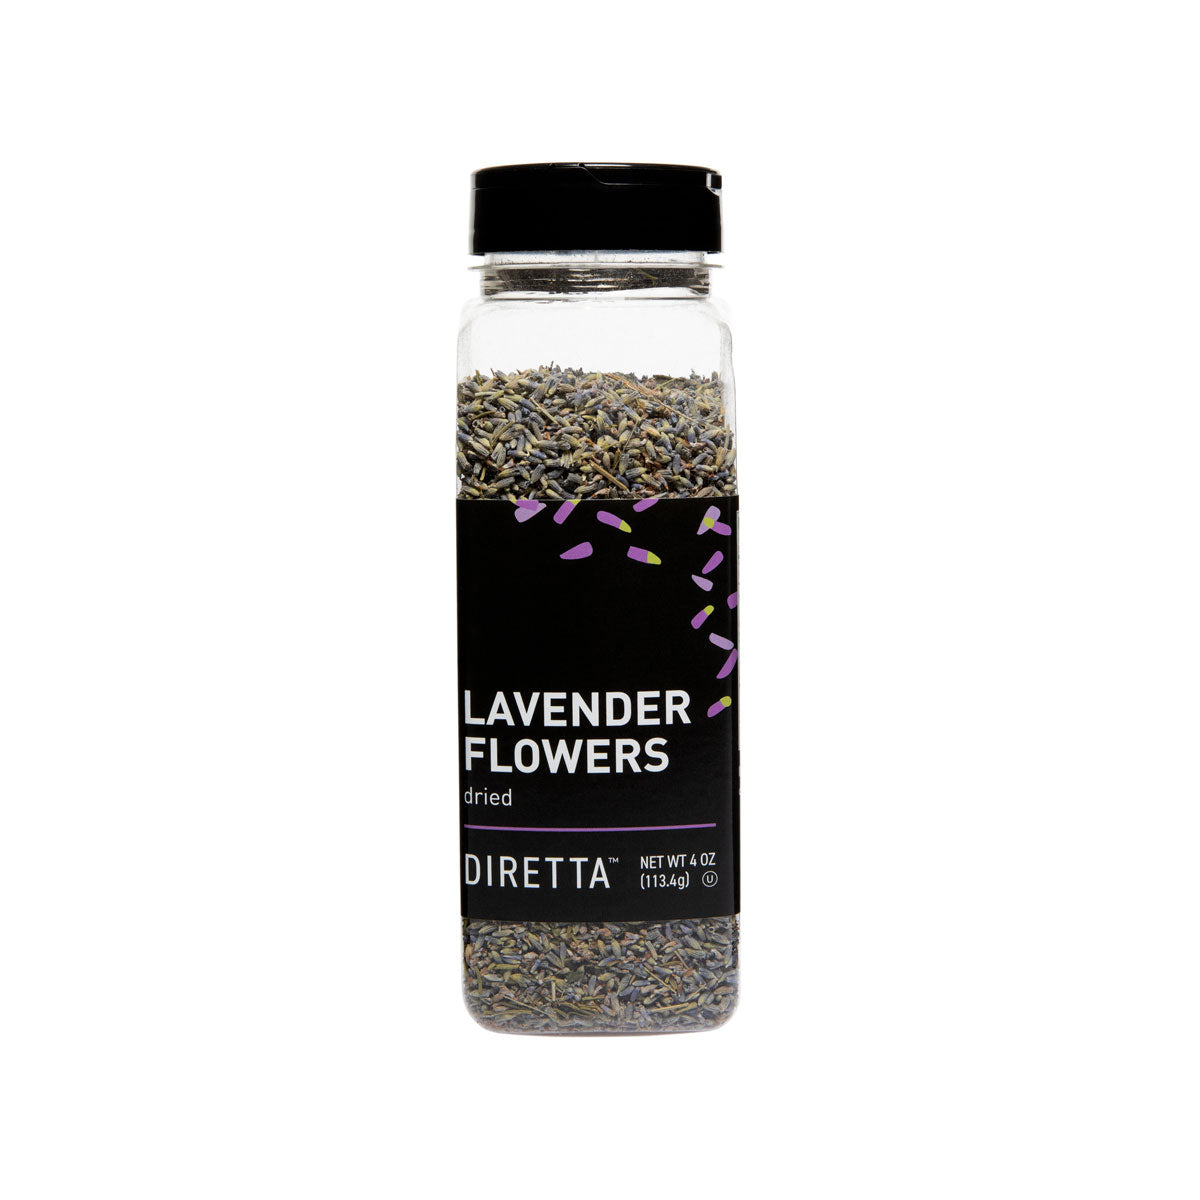 Diretta Dried Lavender Flowers